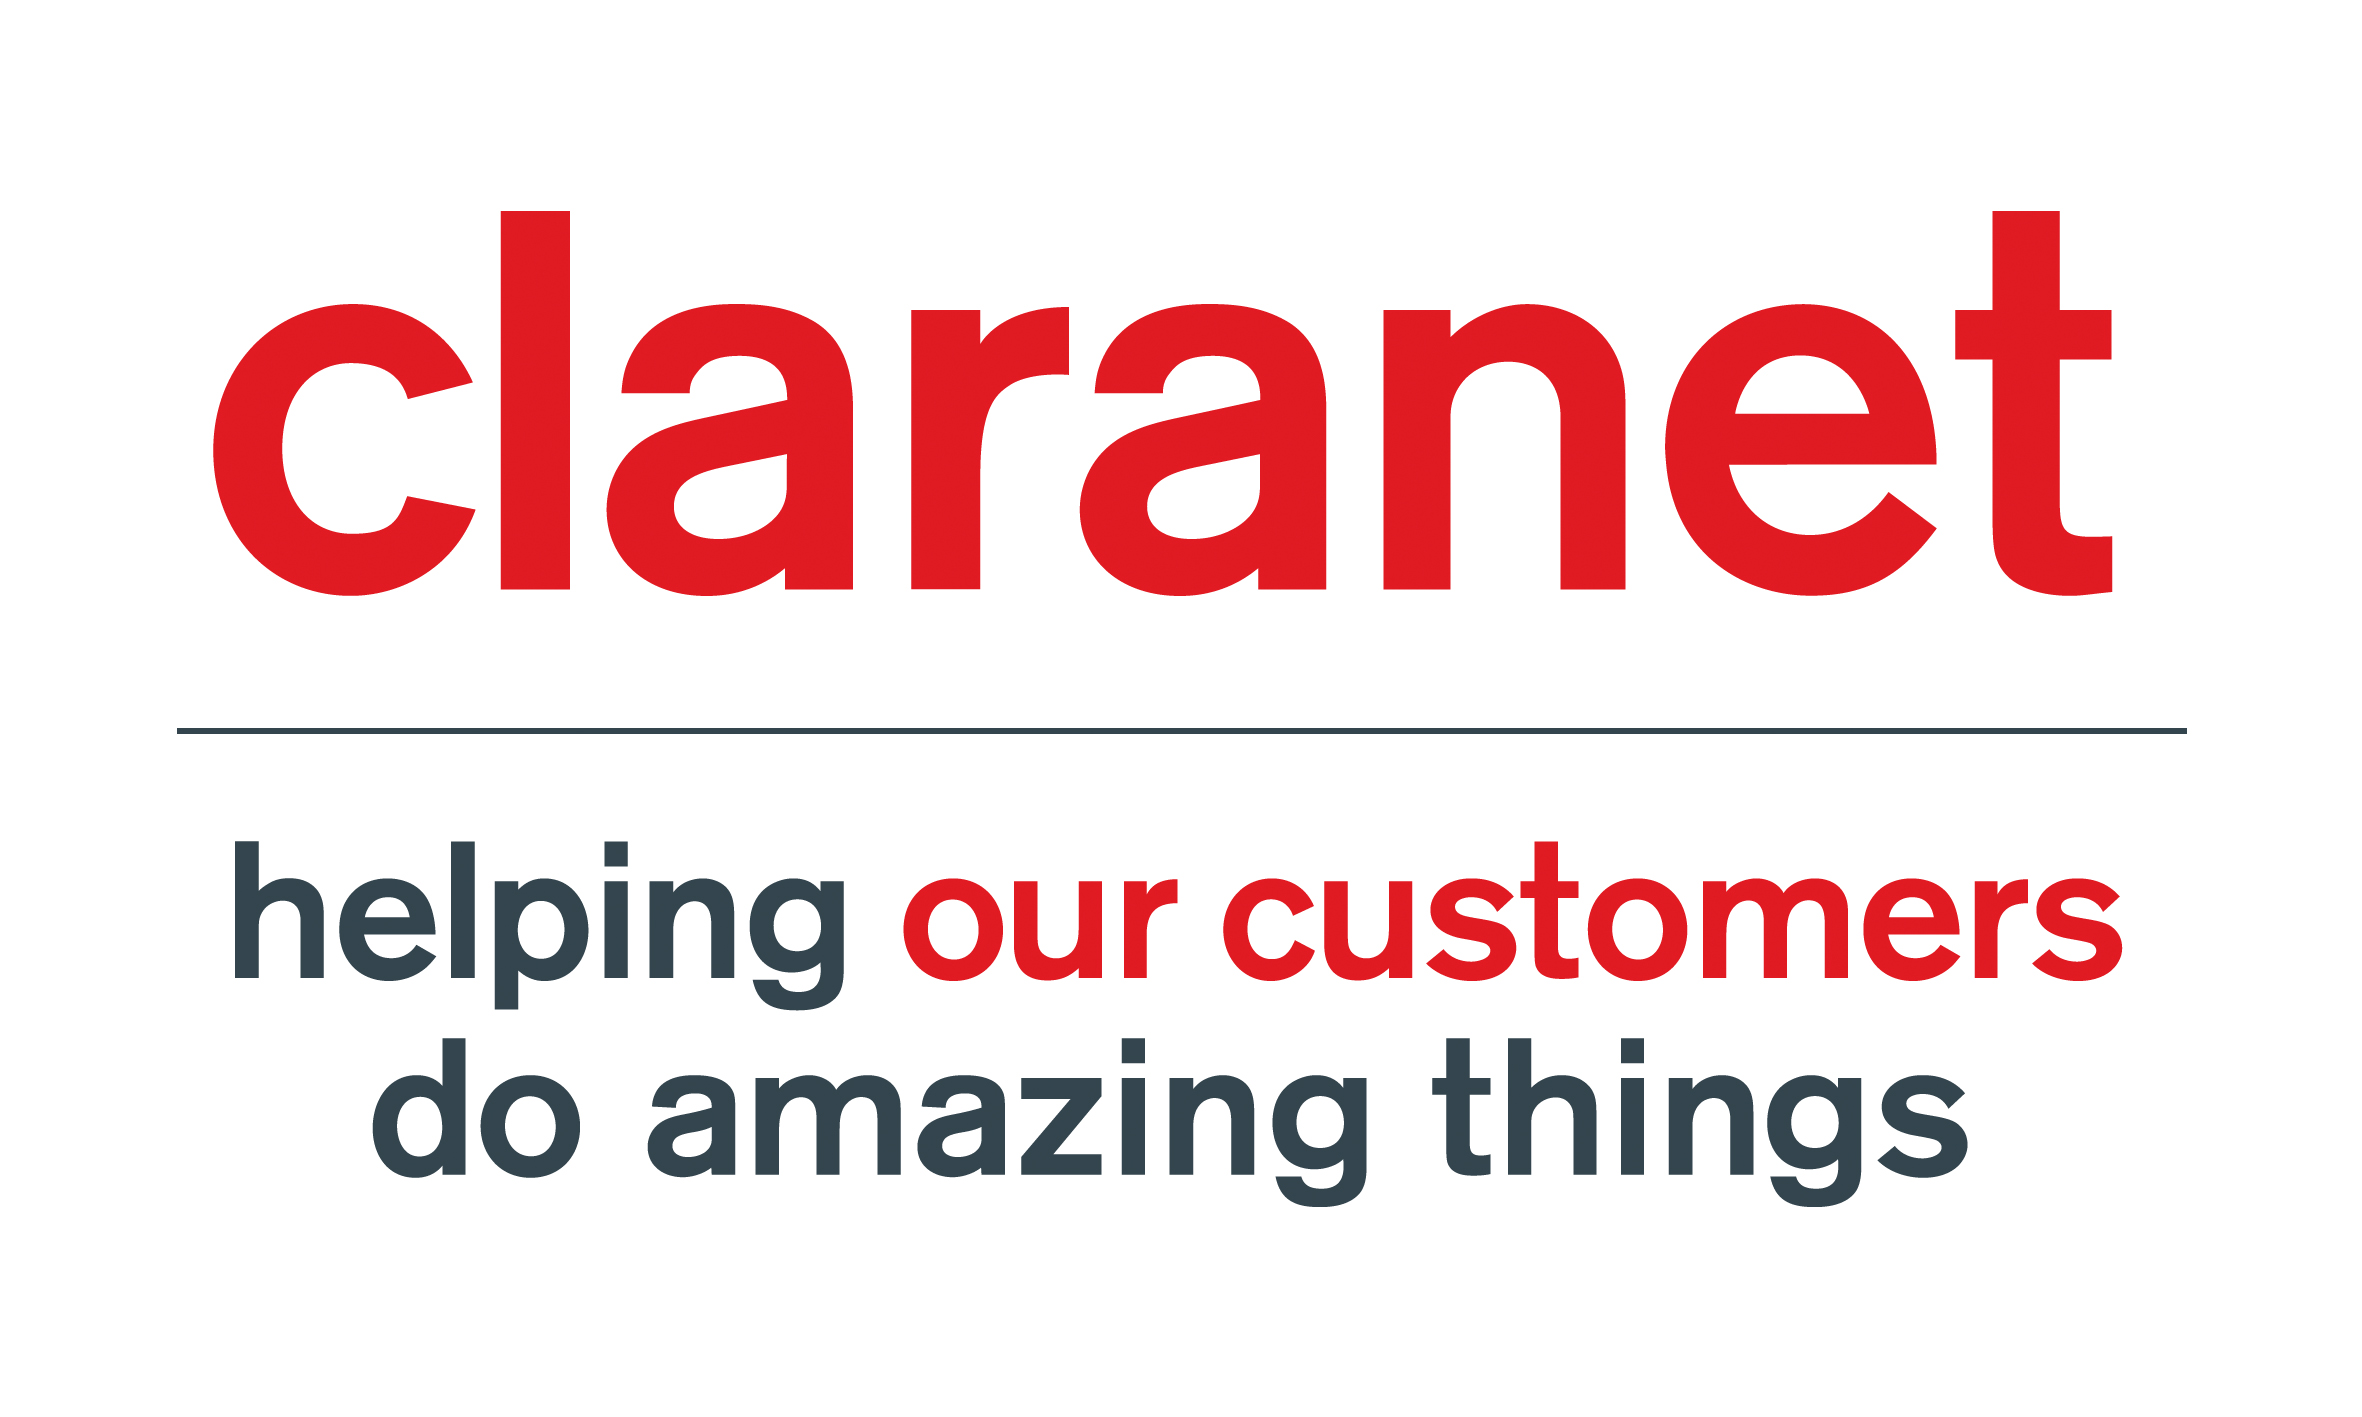 Claranet logo